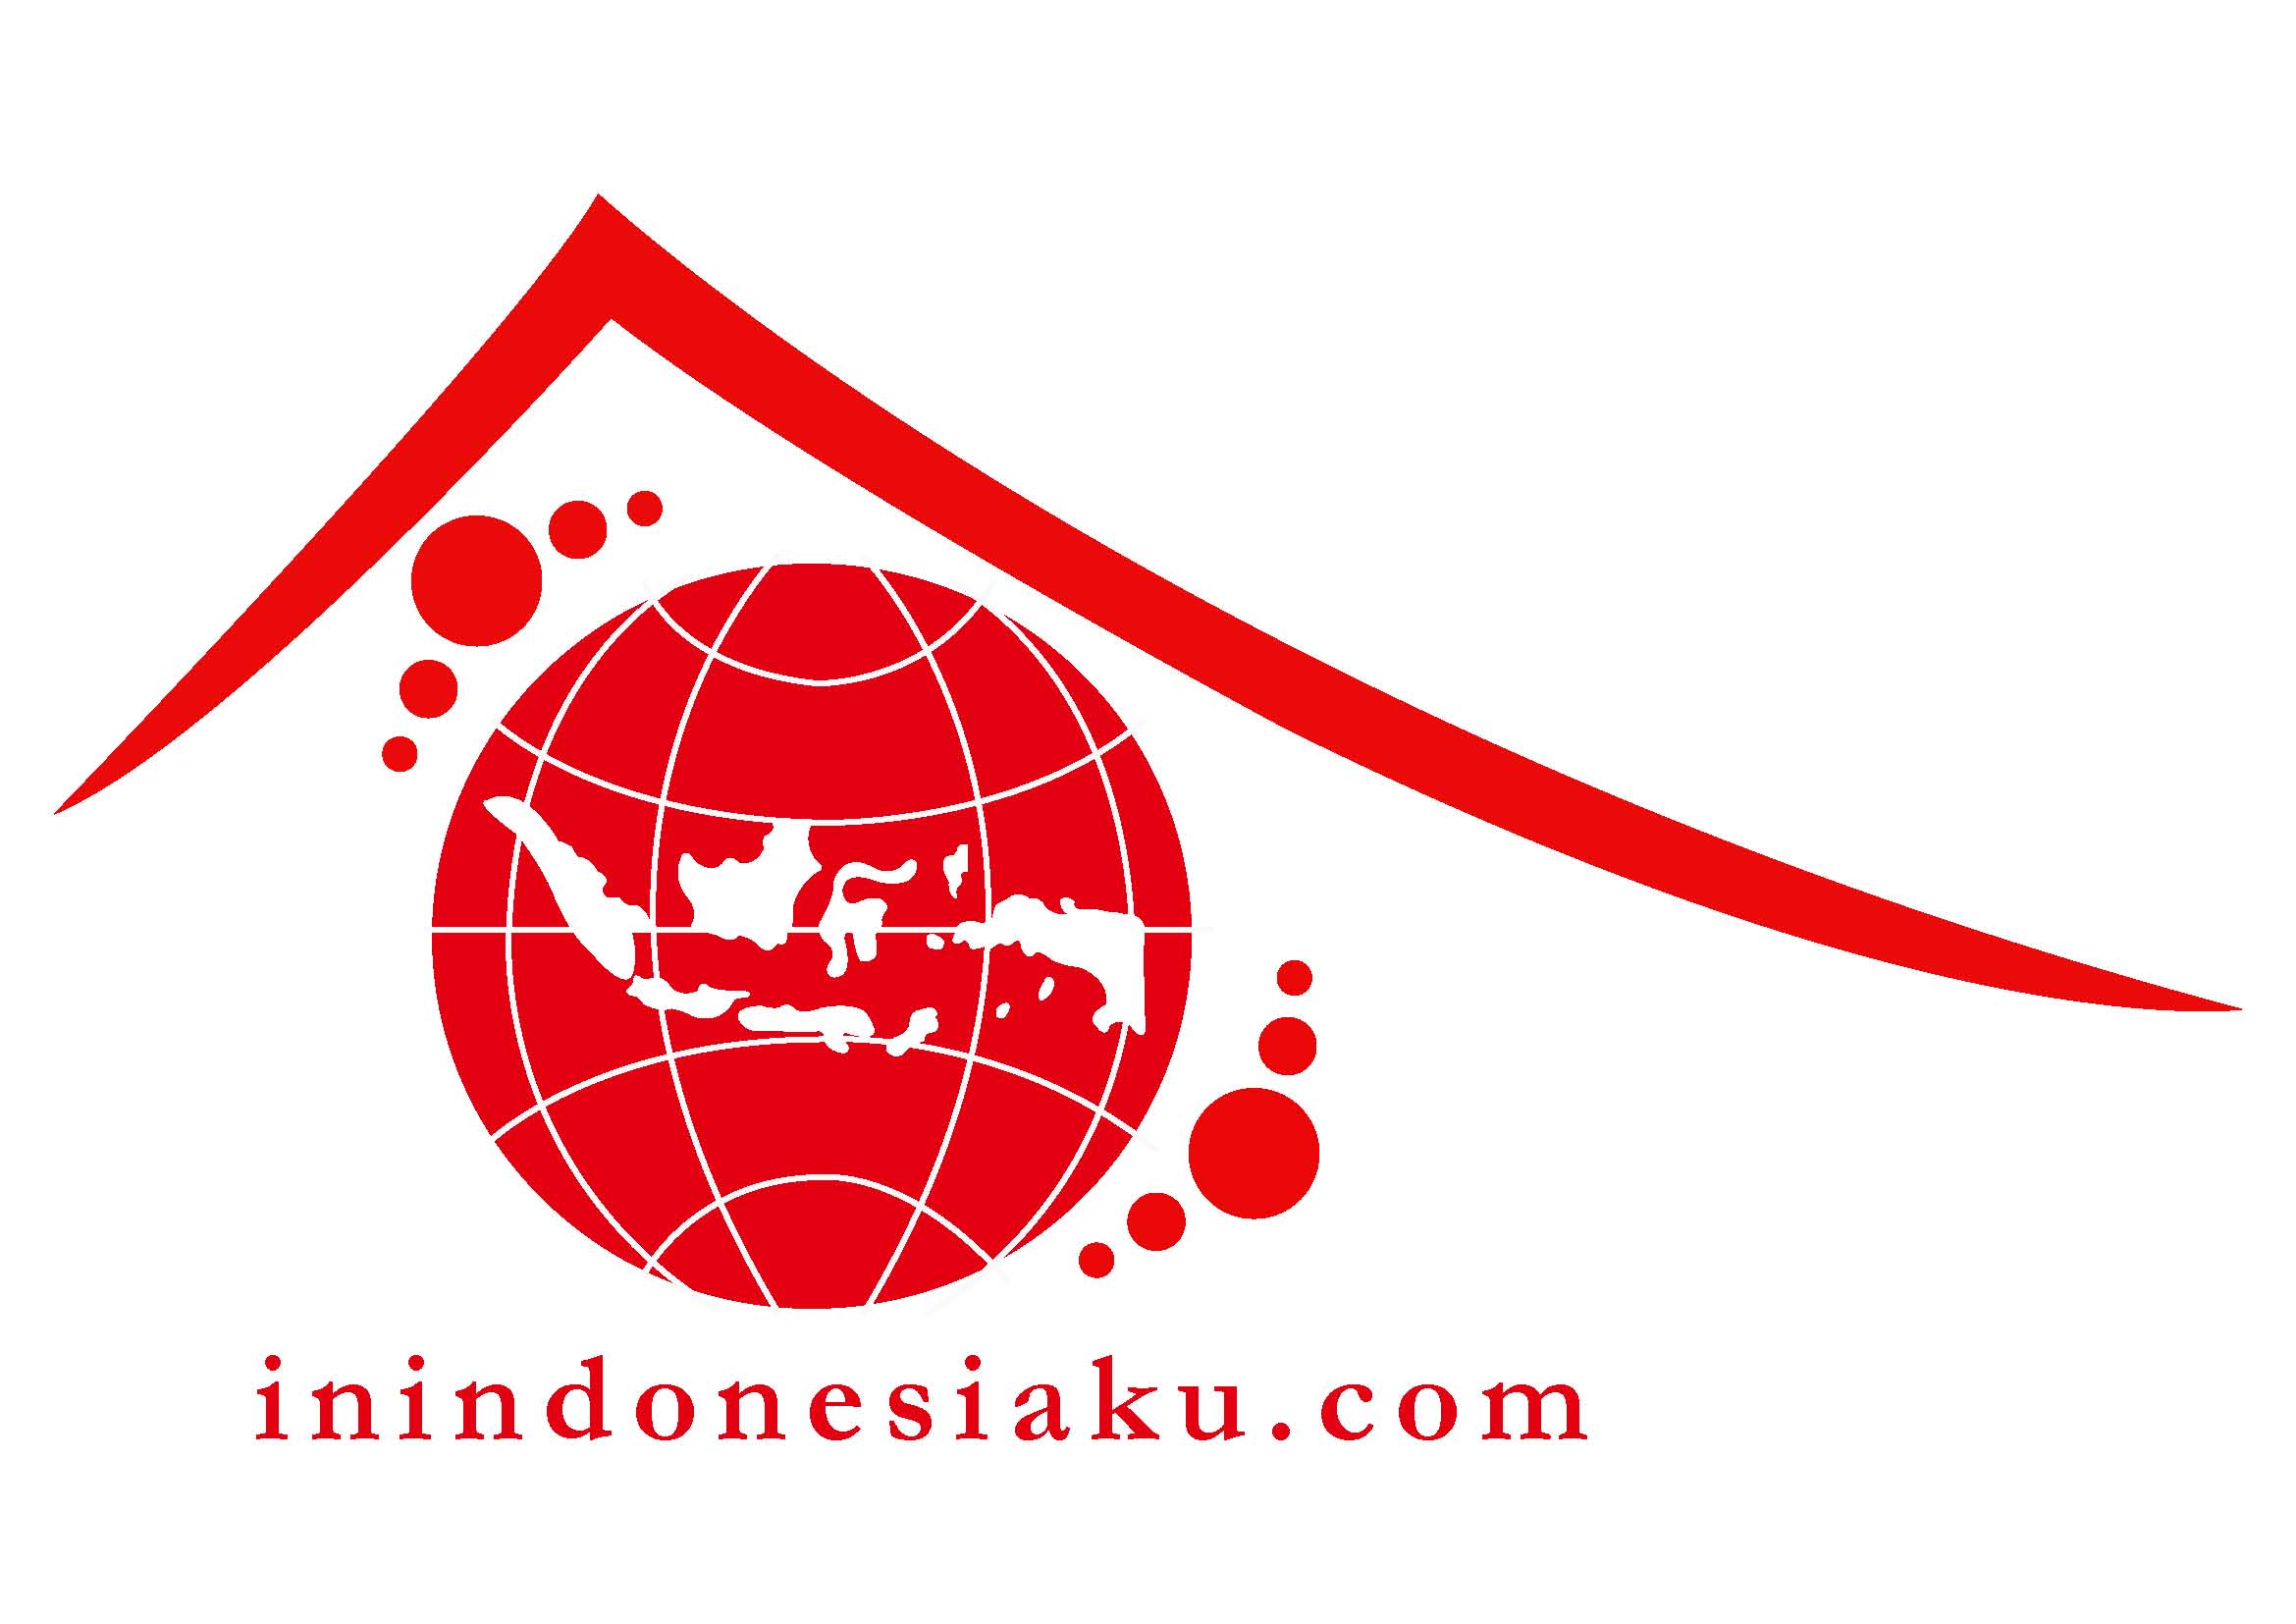 In Indonesiaku Community